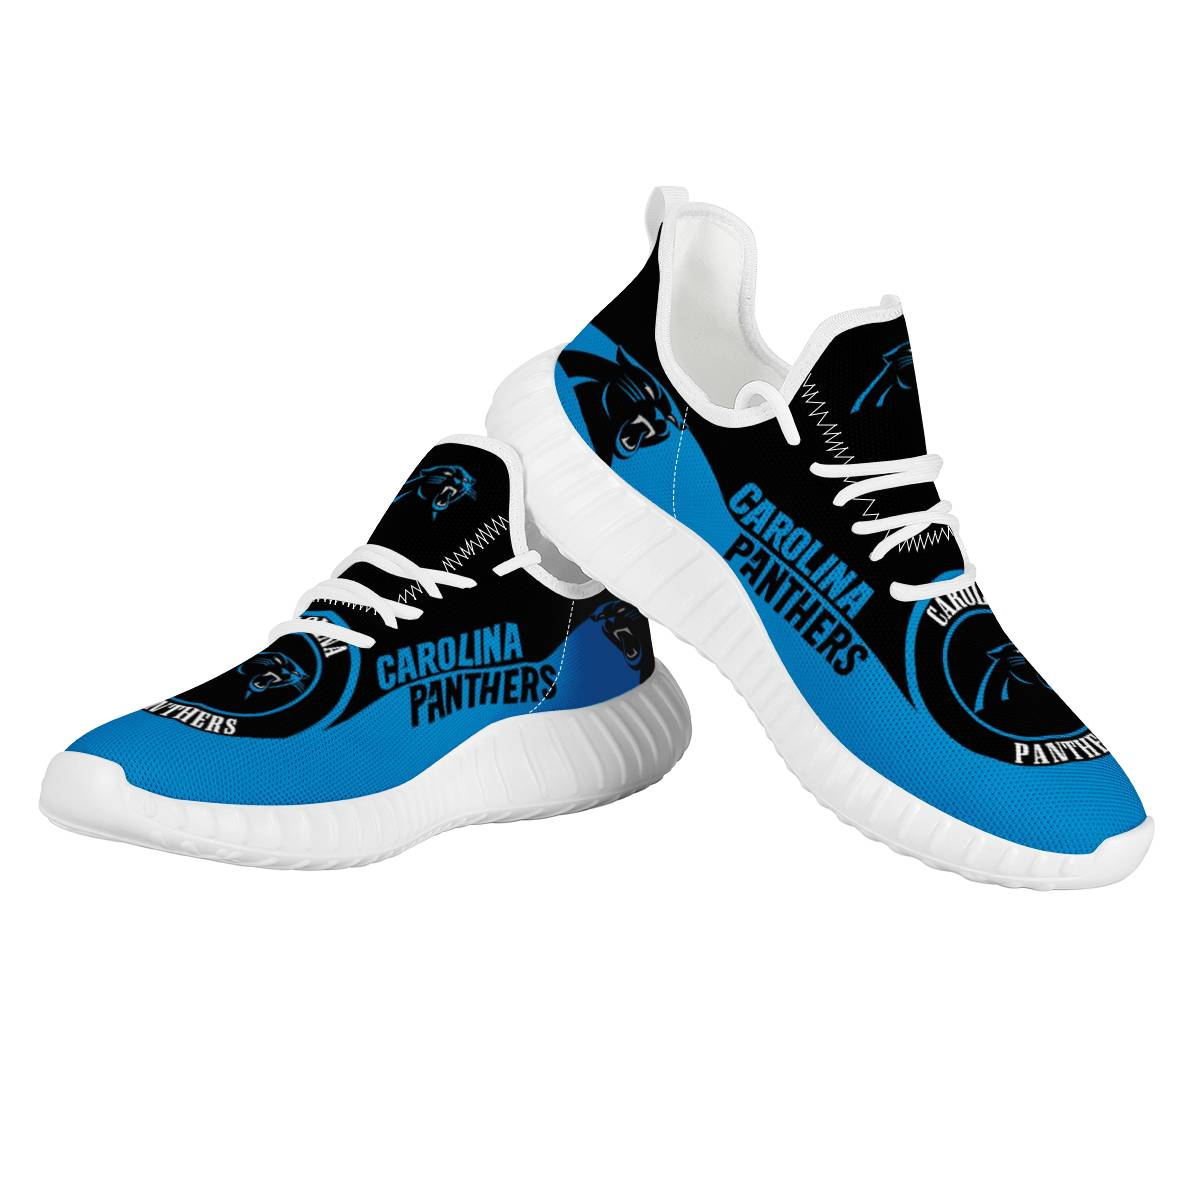 Men's Carolina Panthers Mesh Knit Sneakers/Shoes 004